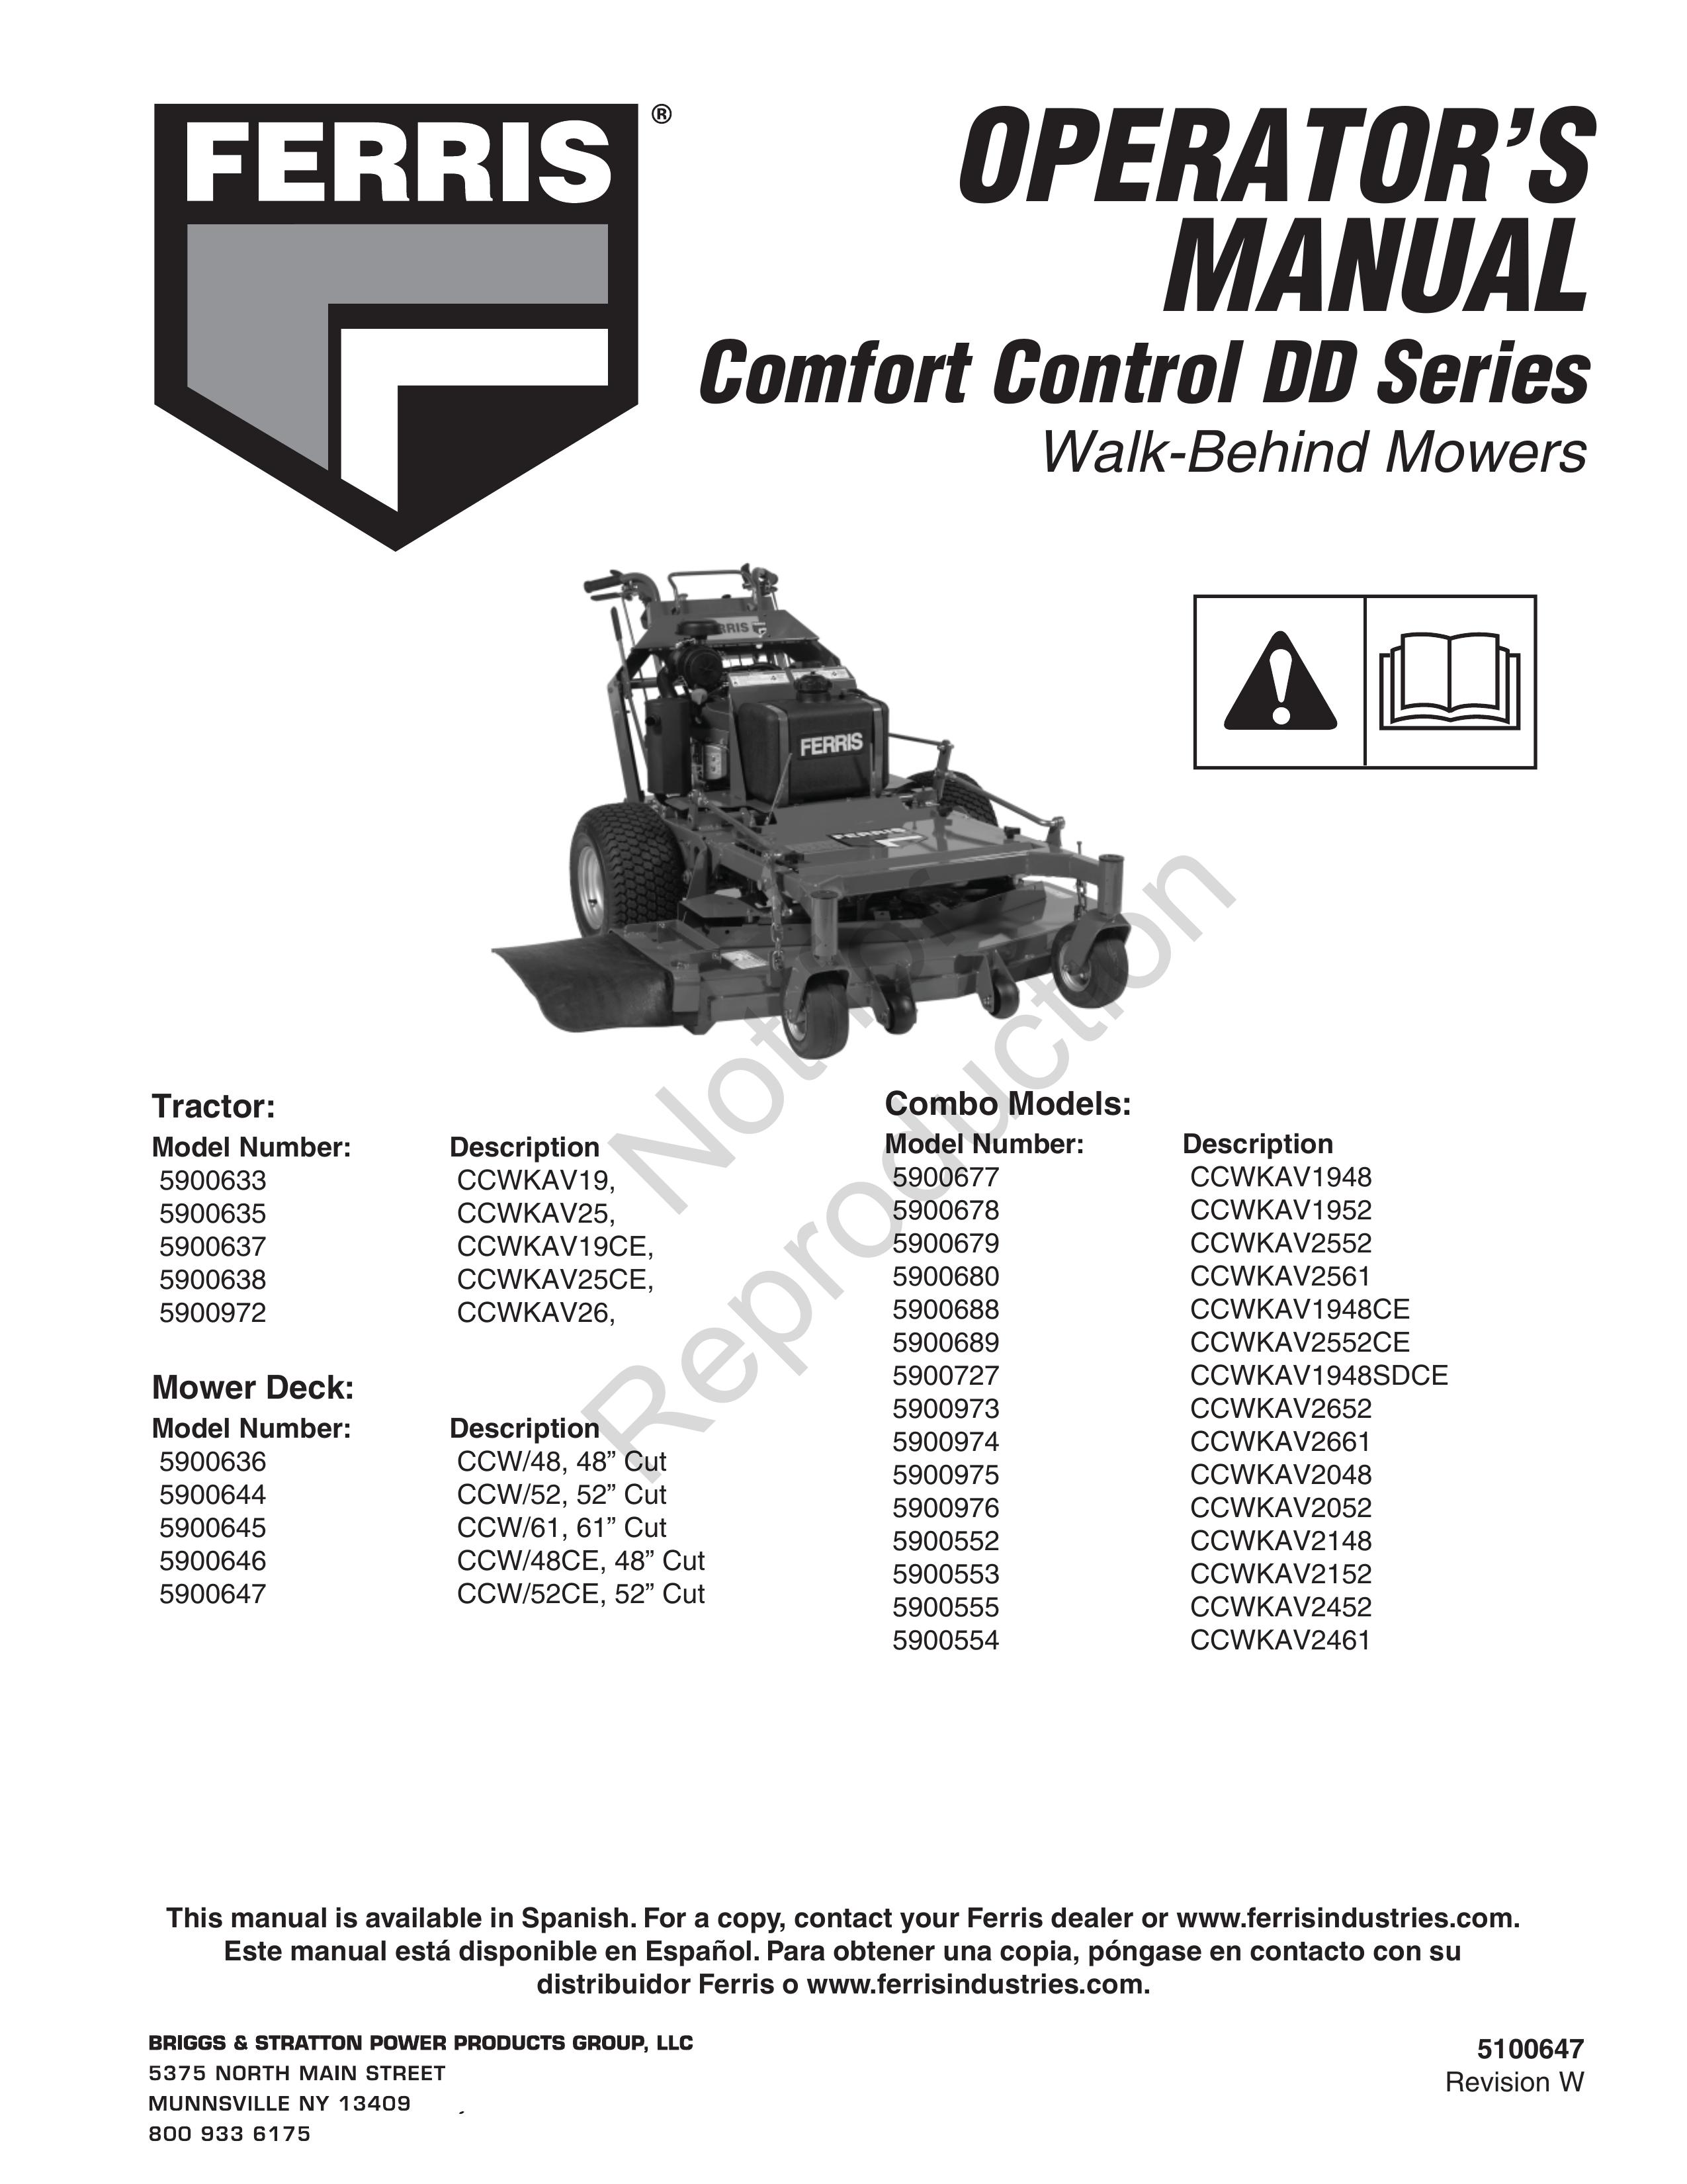 Ferris Industries 5900646 Lawn Mower User Manual